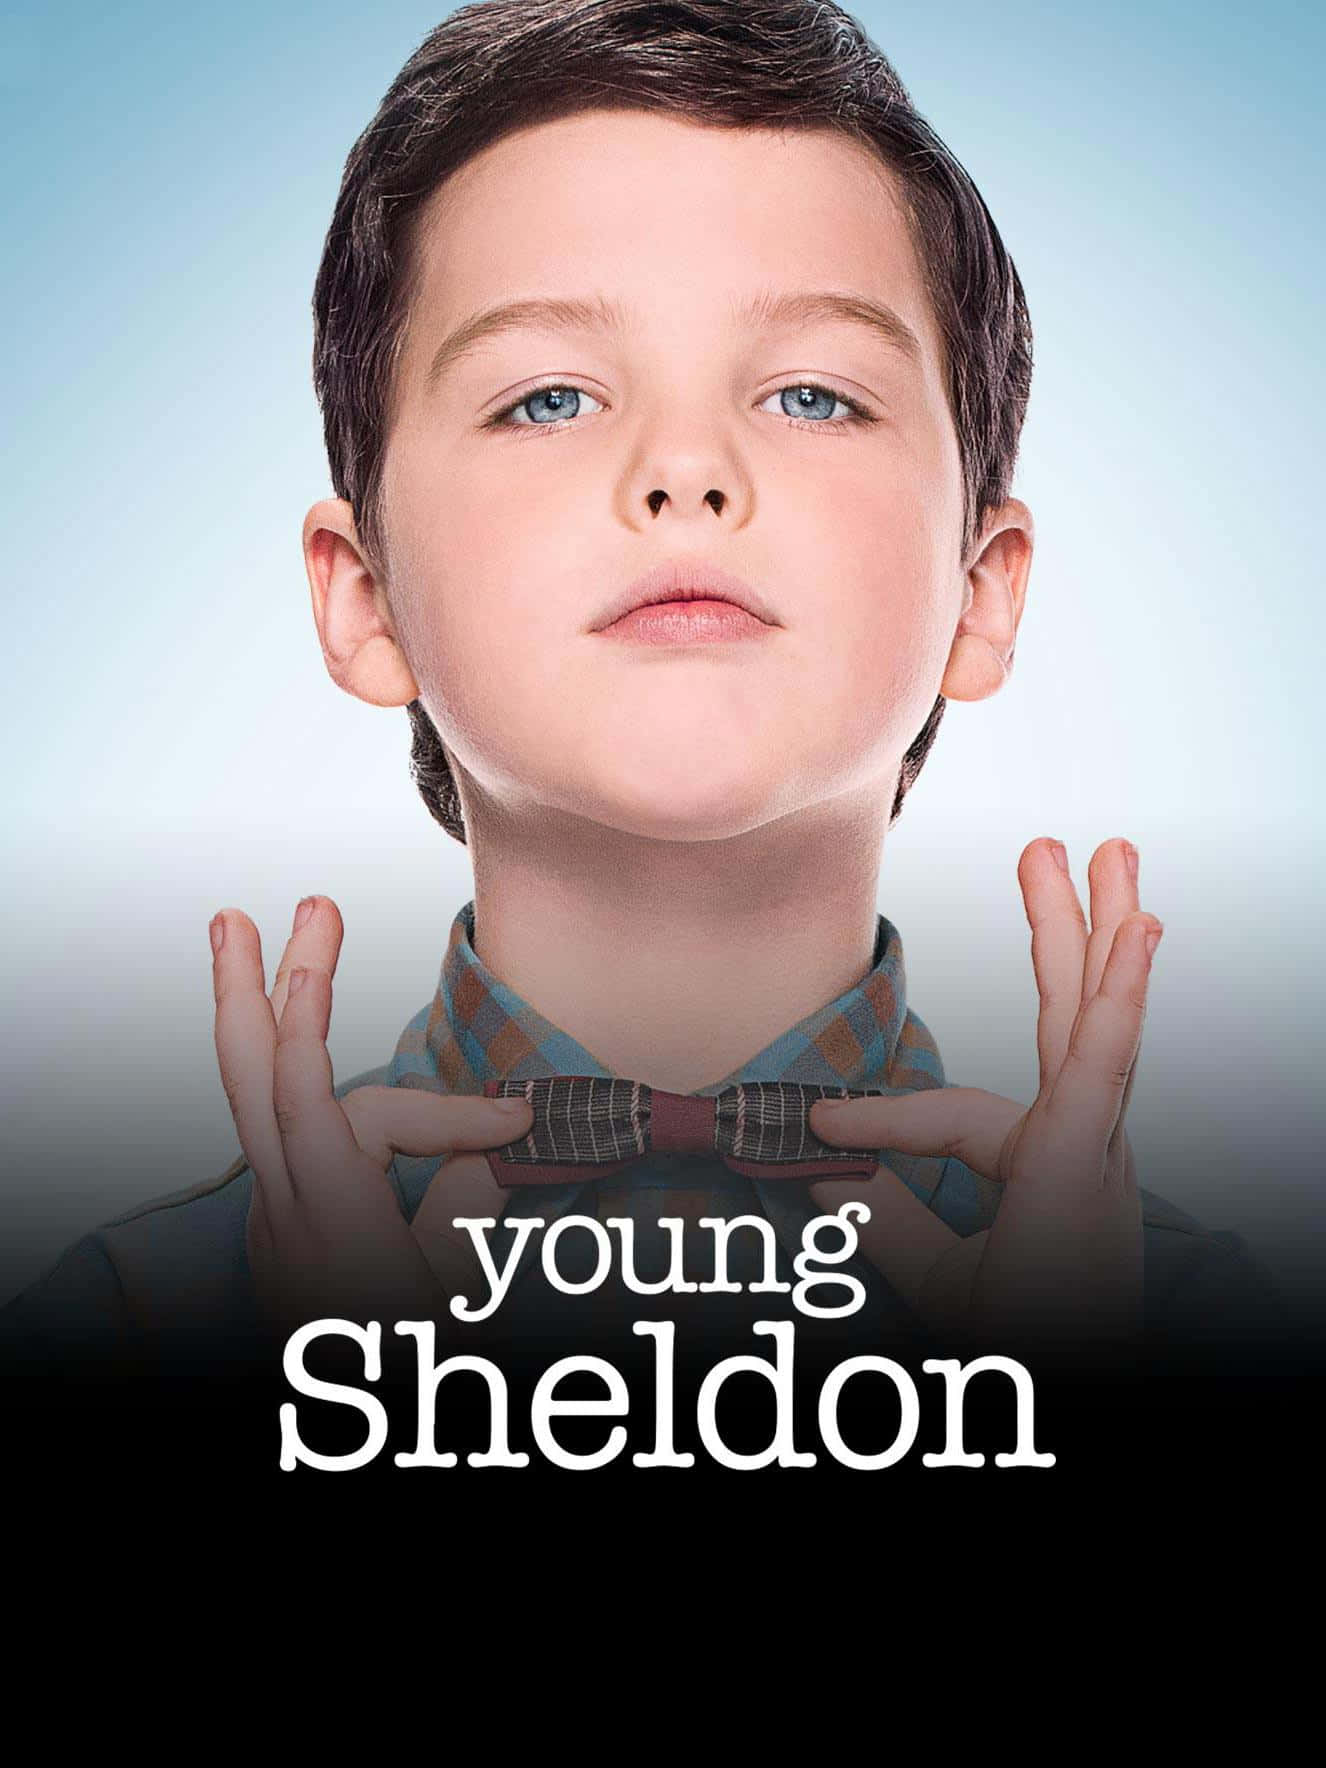 Young Sheldon Promotional Portrait Wallpaper